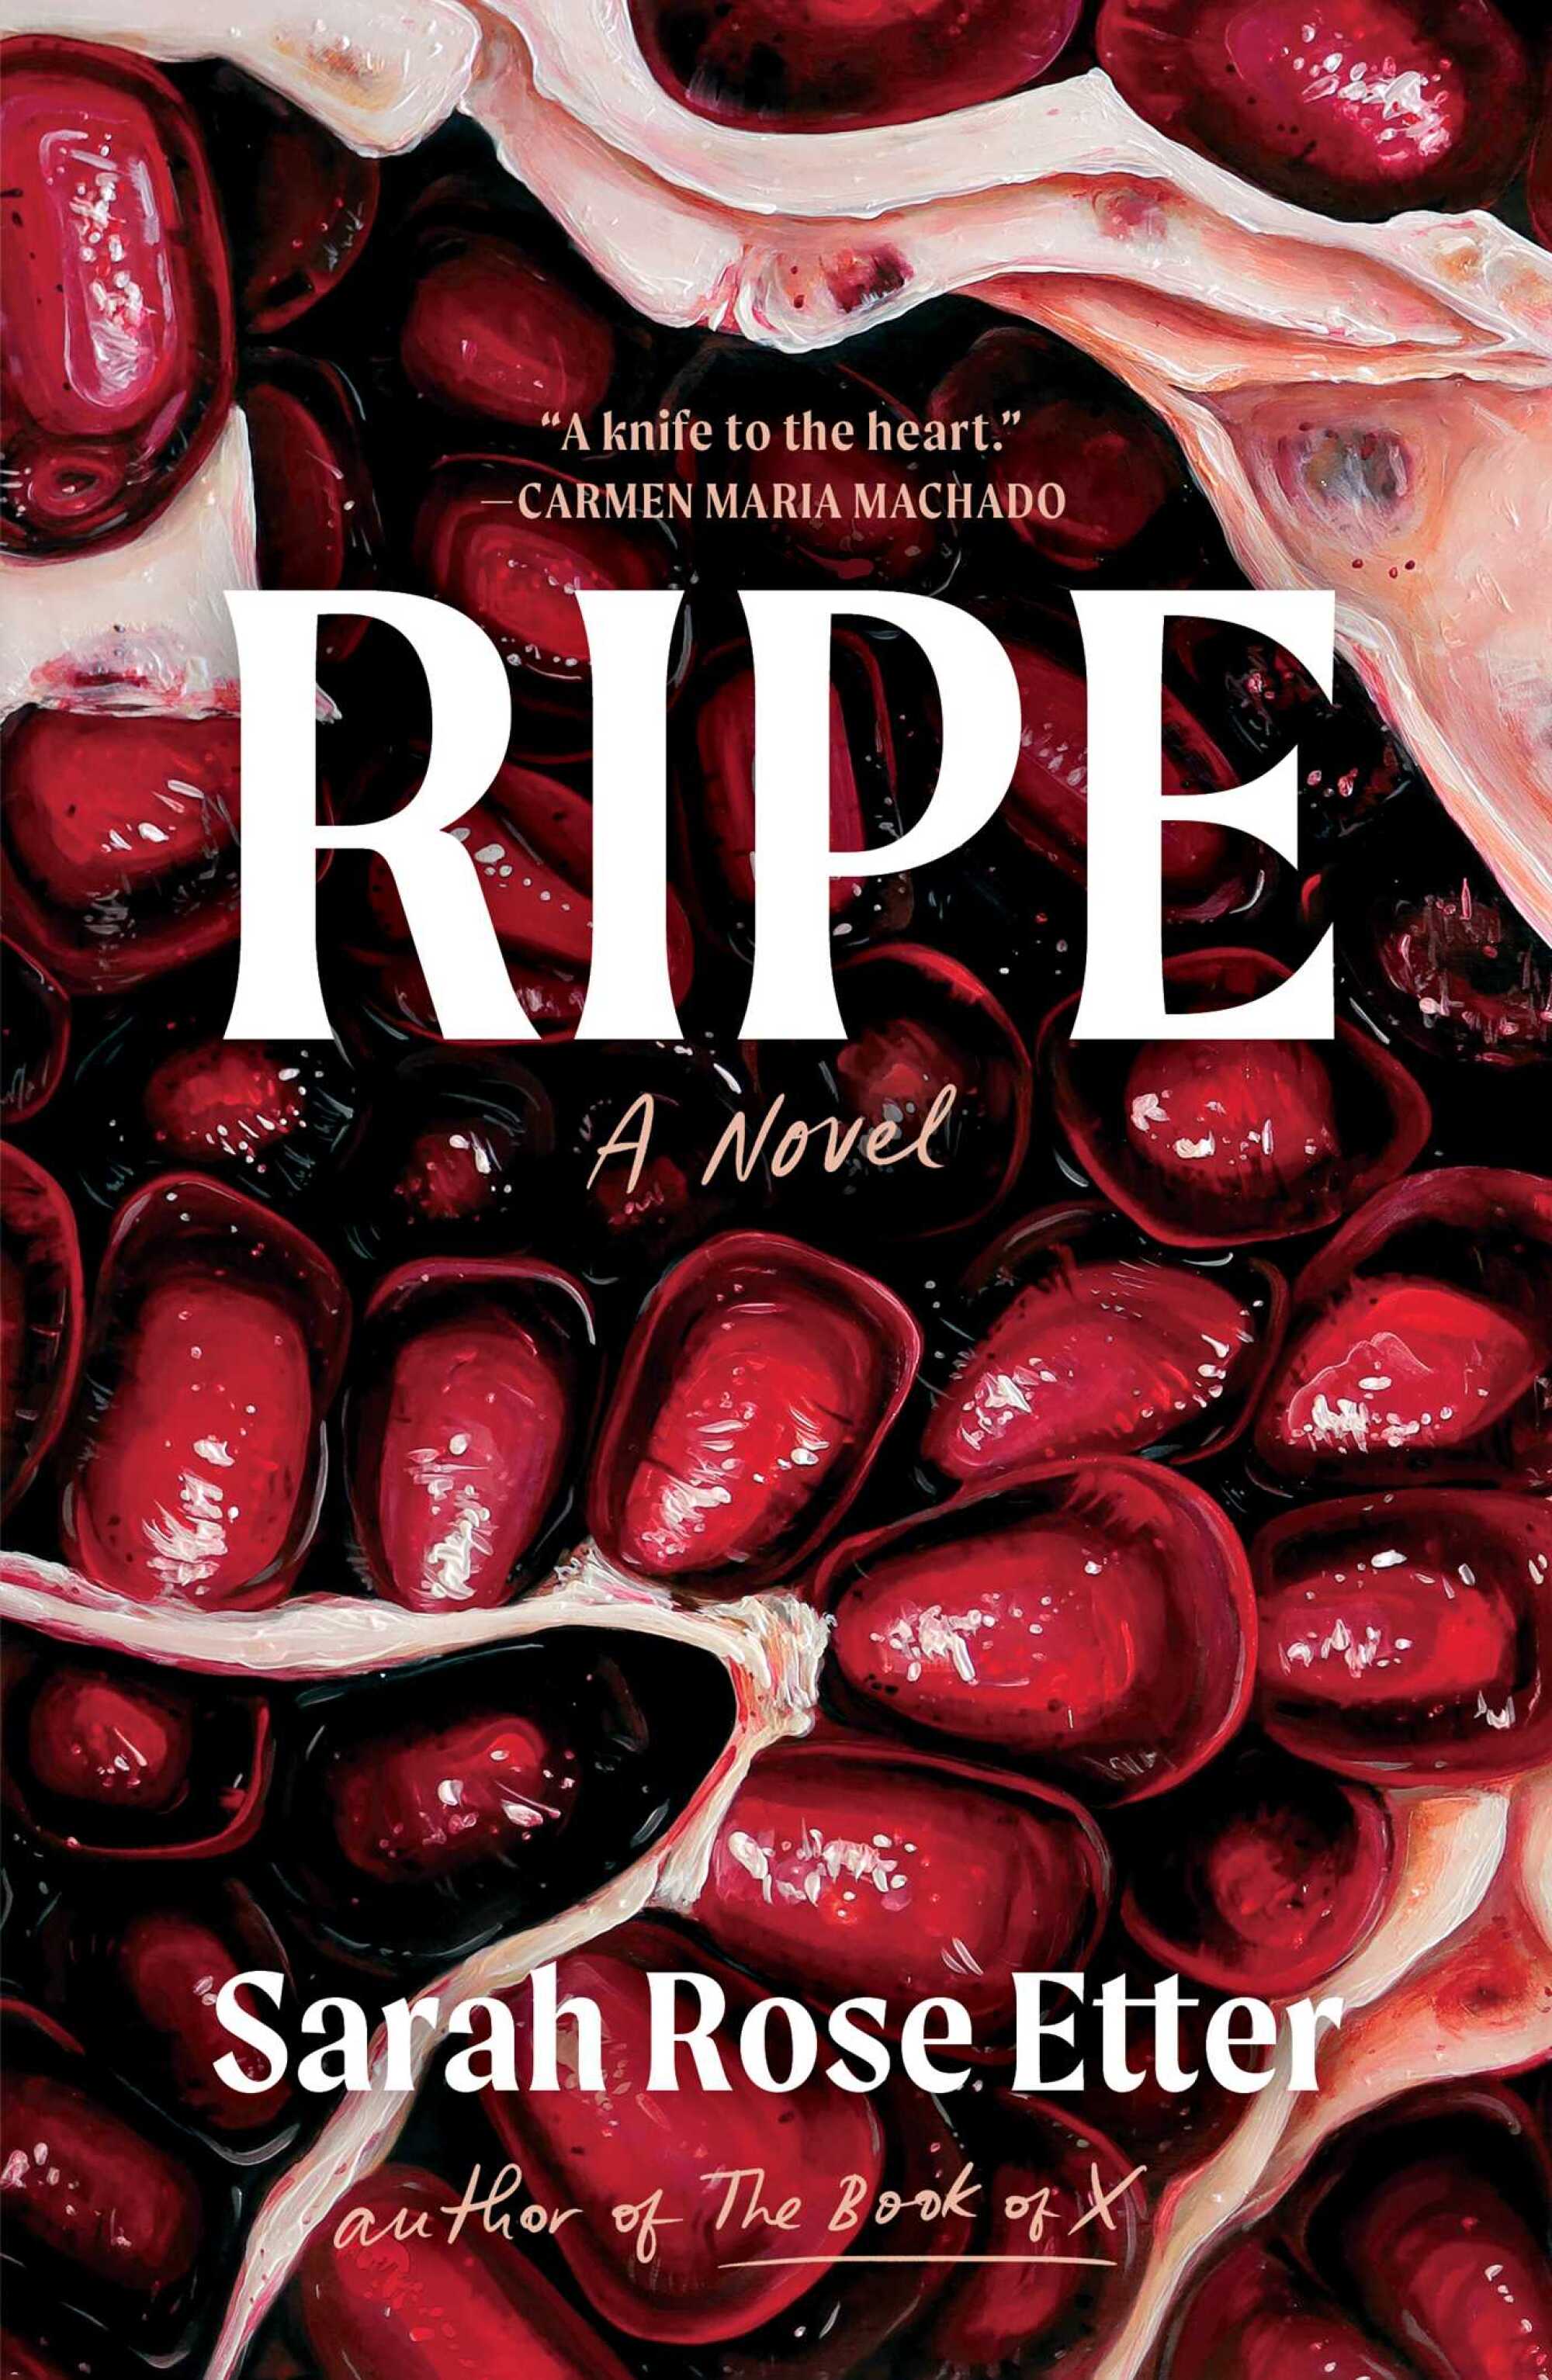 "Ripe," by Sarah Rose Etter